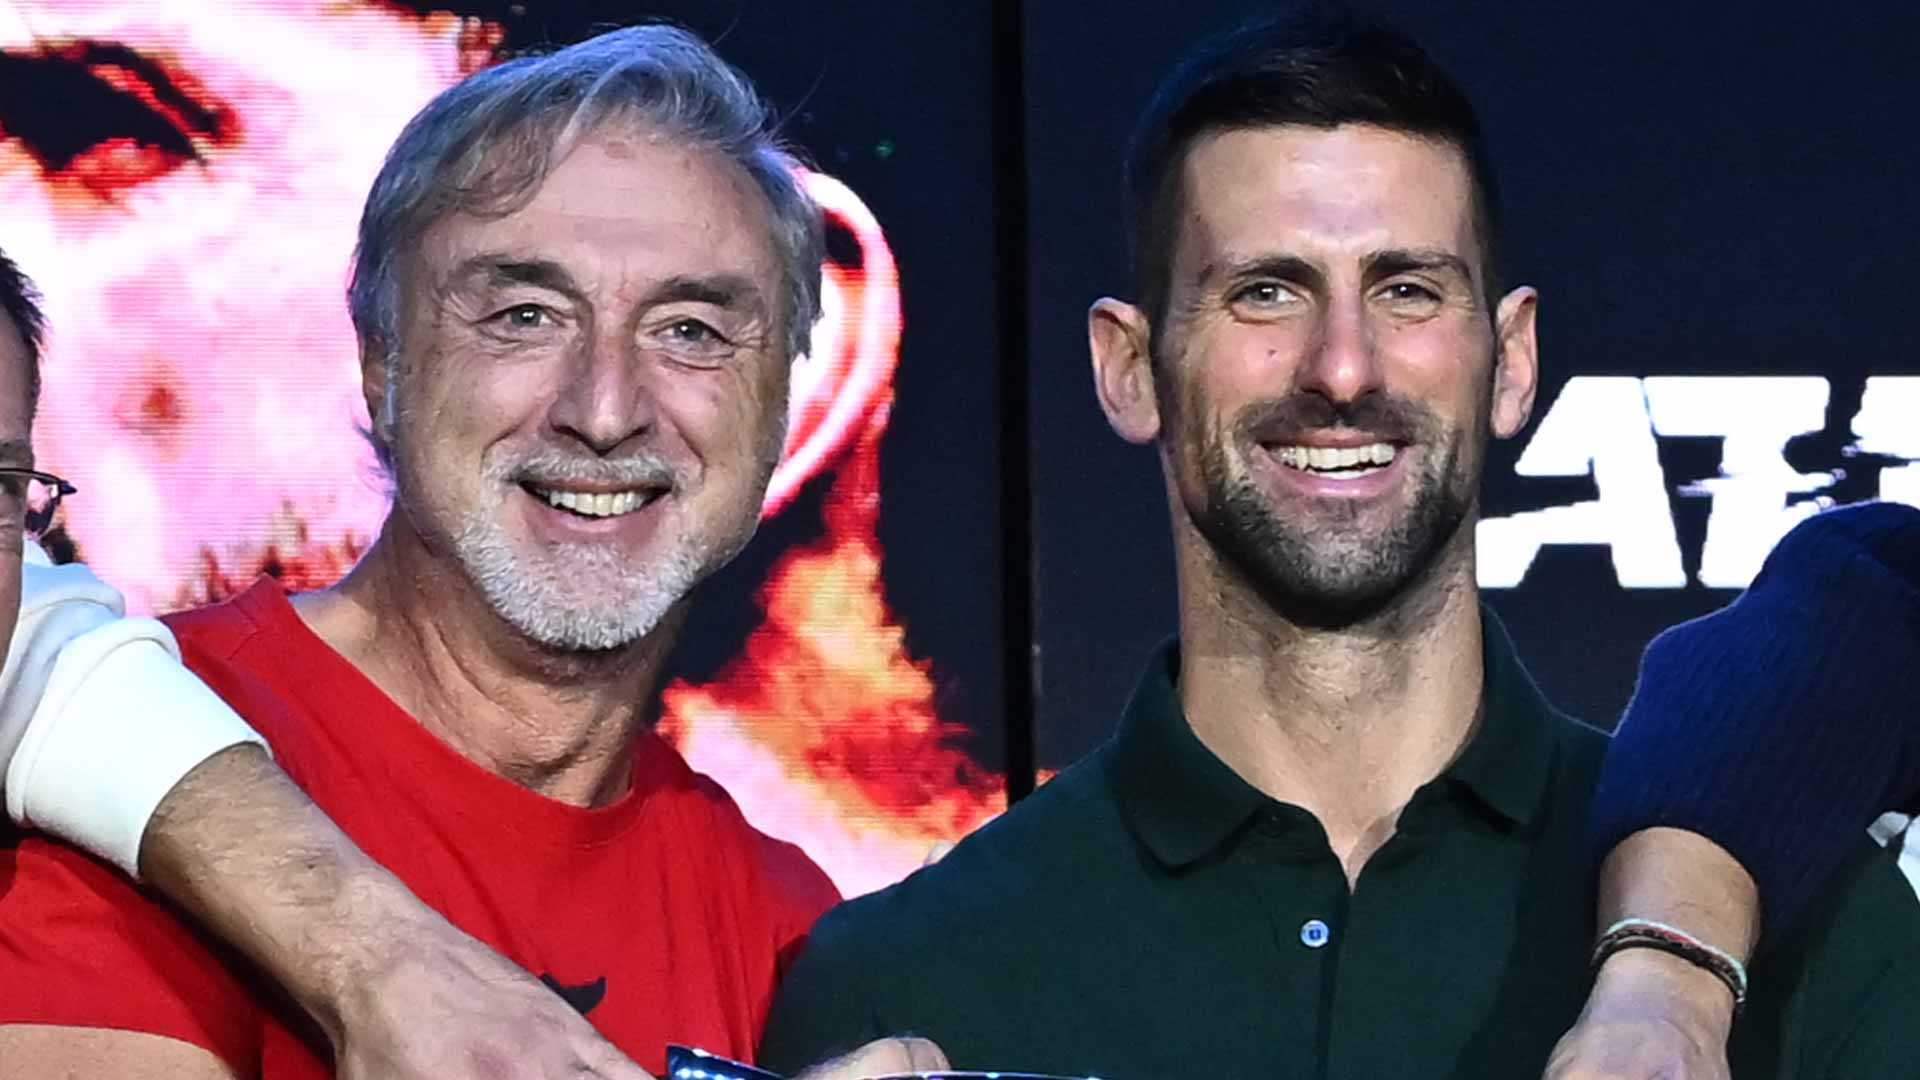 Marco Panichi and Novak Djokovic